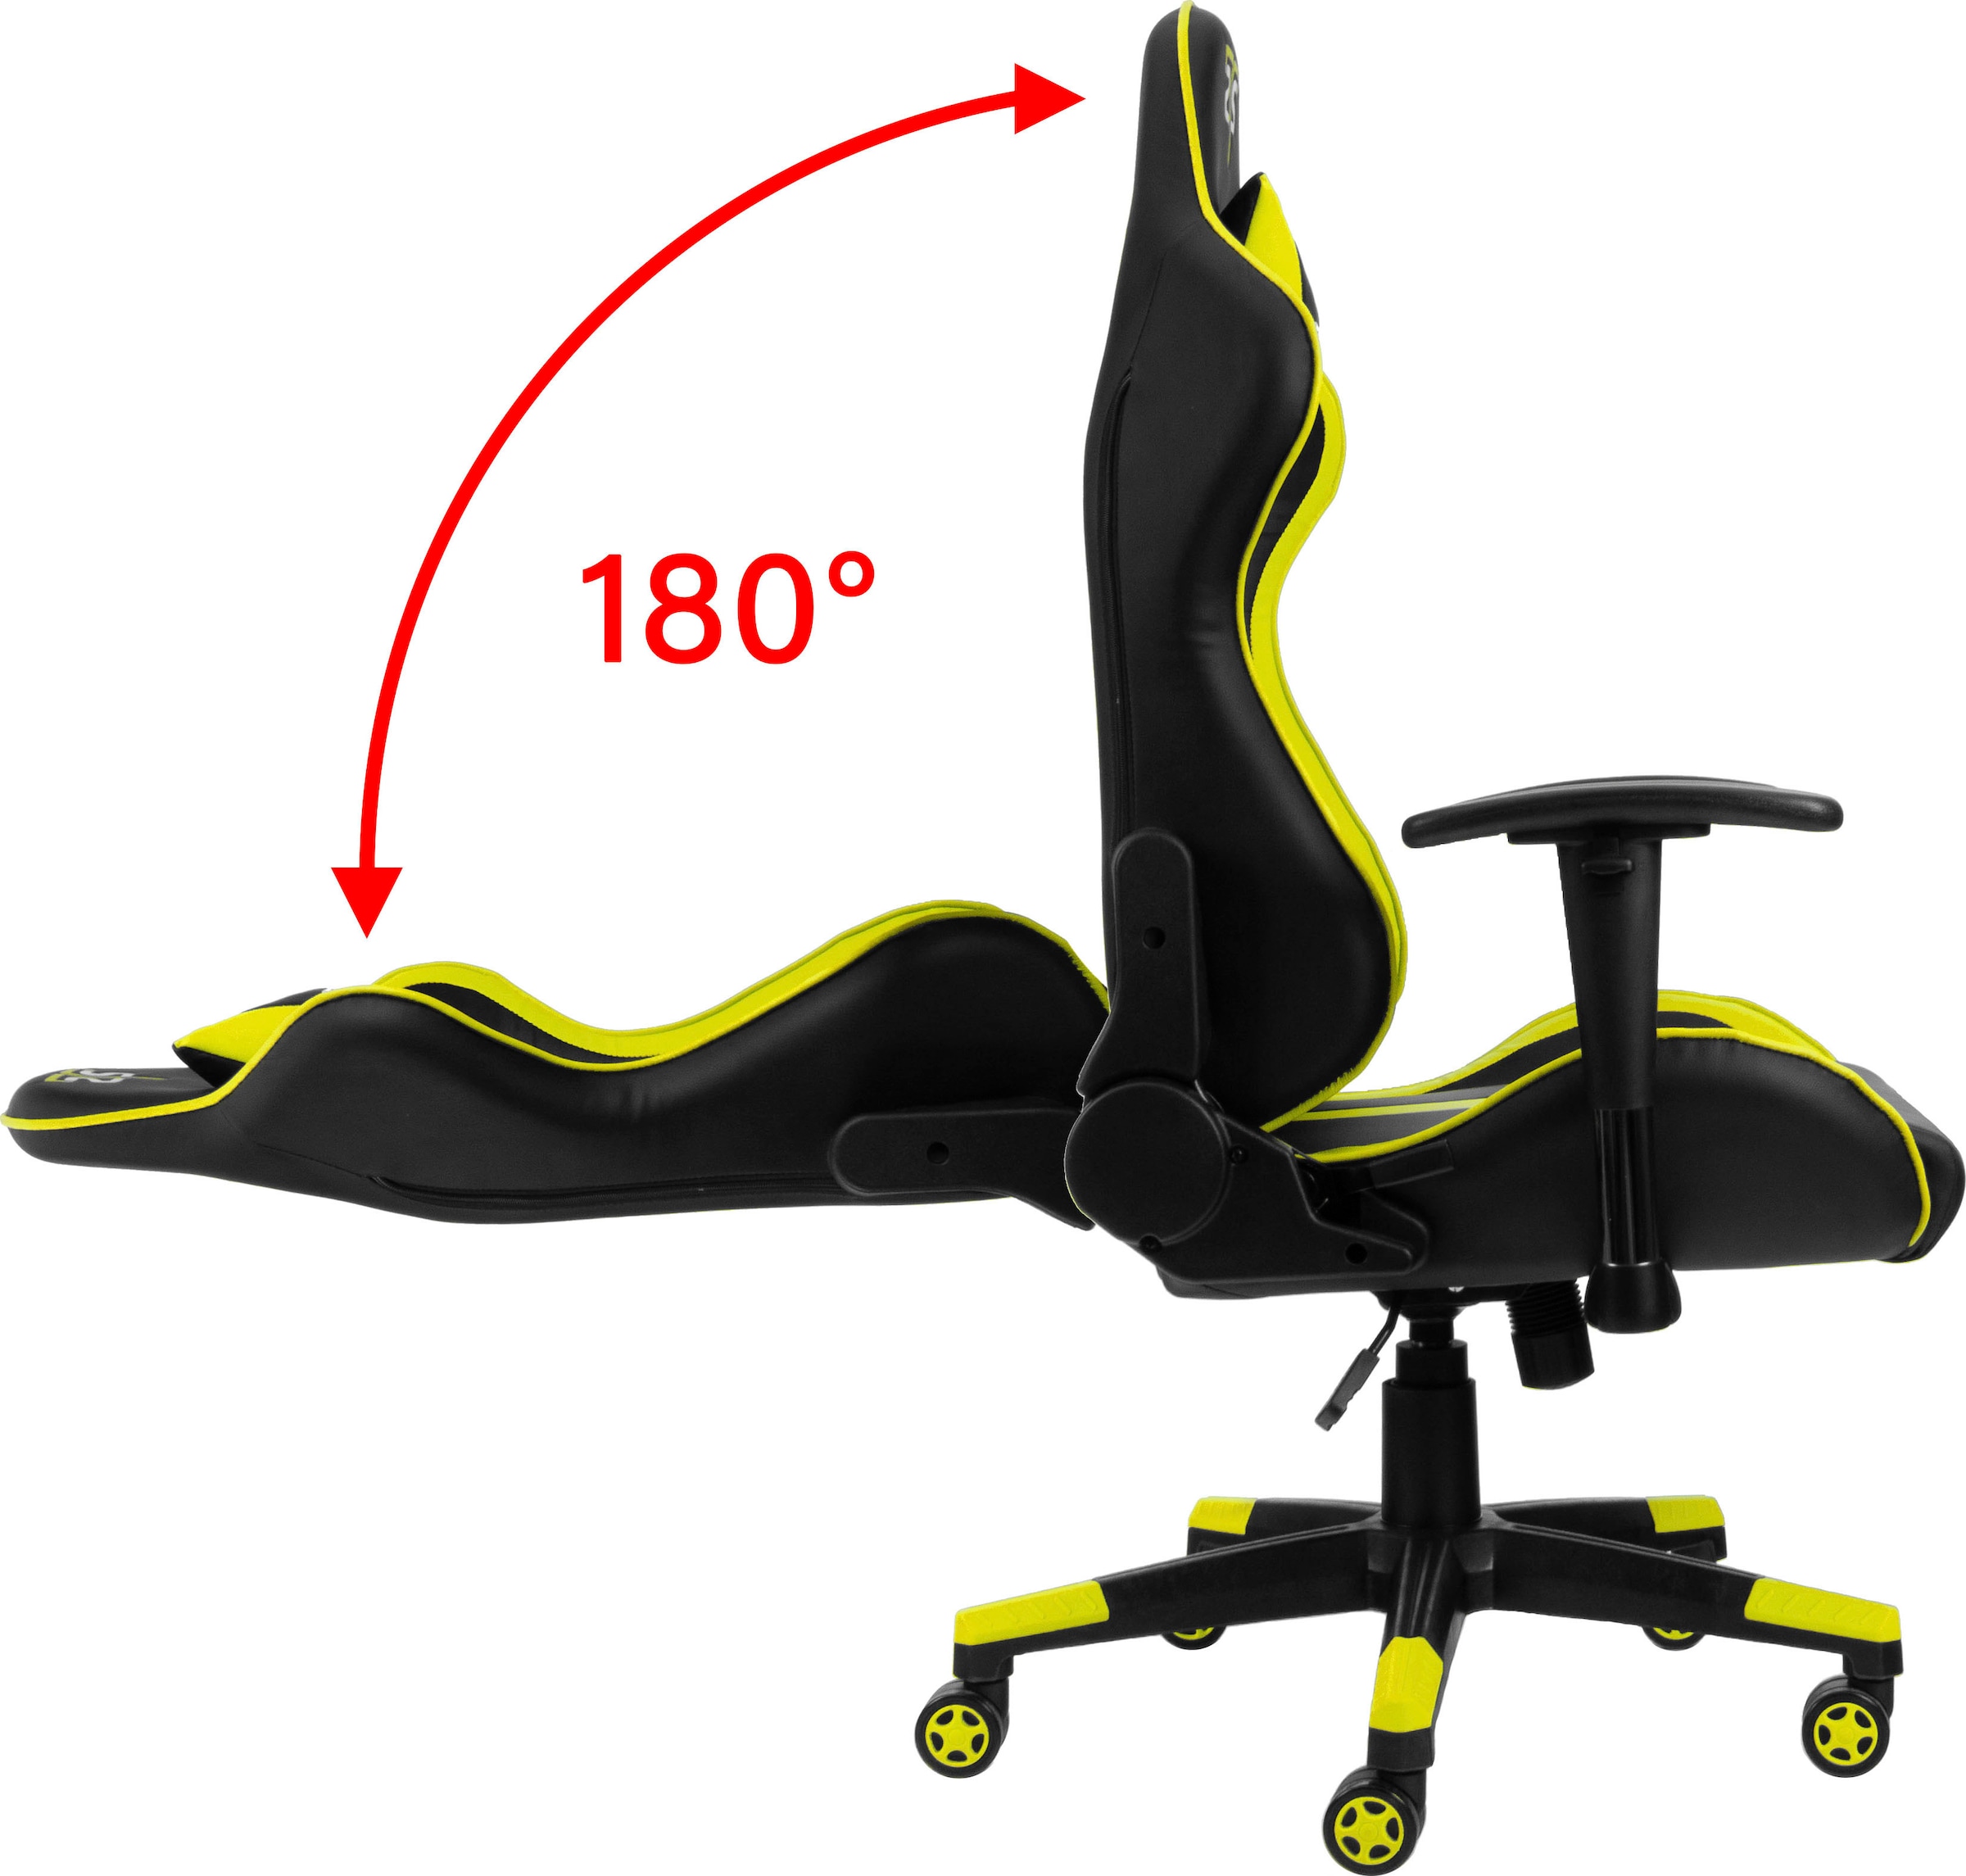 Hyrican Gaming-Stuhl »Striker COMBO« Gaming-Stuhl + Bodenschutzmatte "WZ603" Copilot